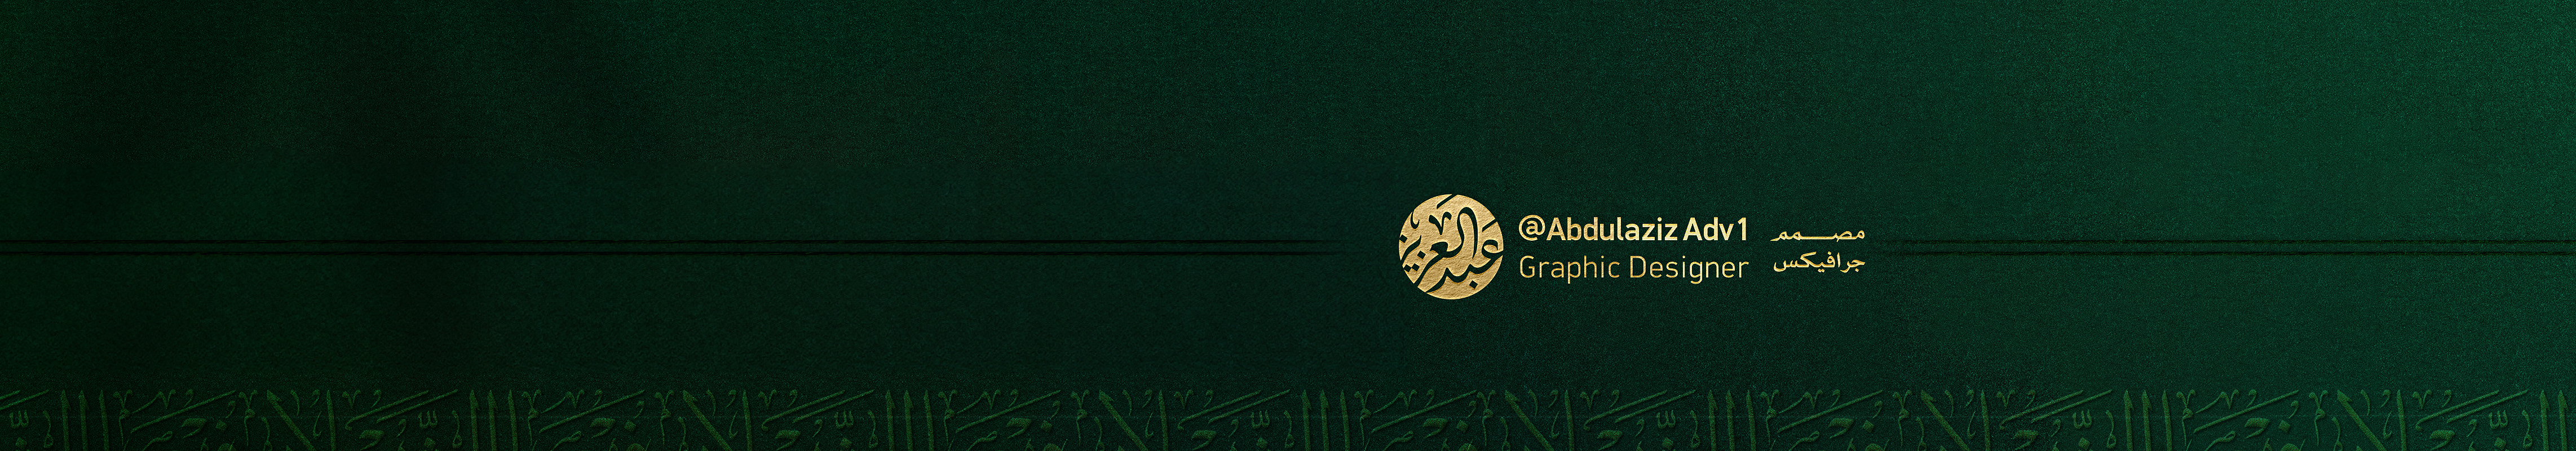 Abdulaziz Altharhani's profile banner